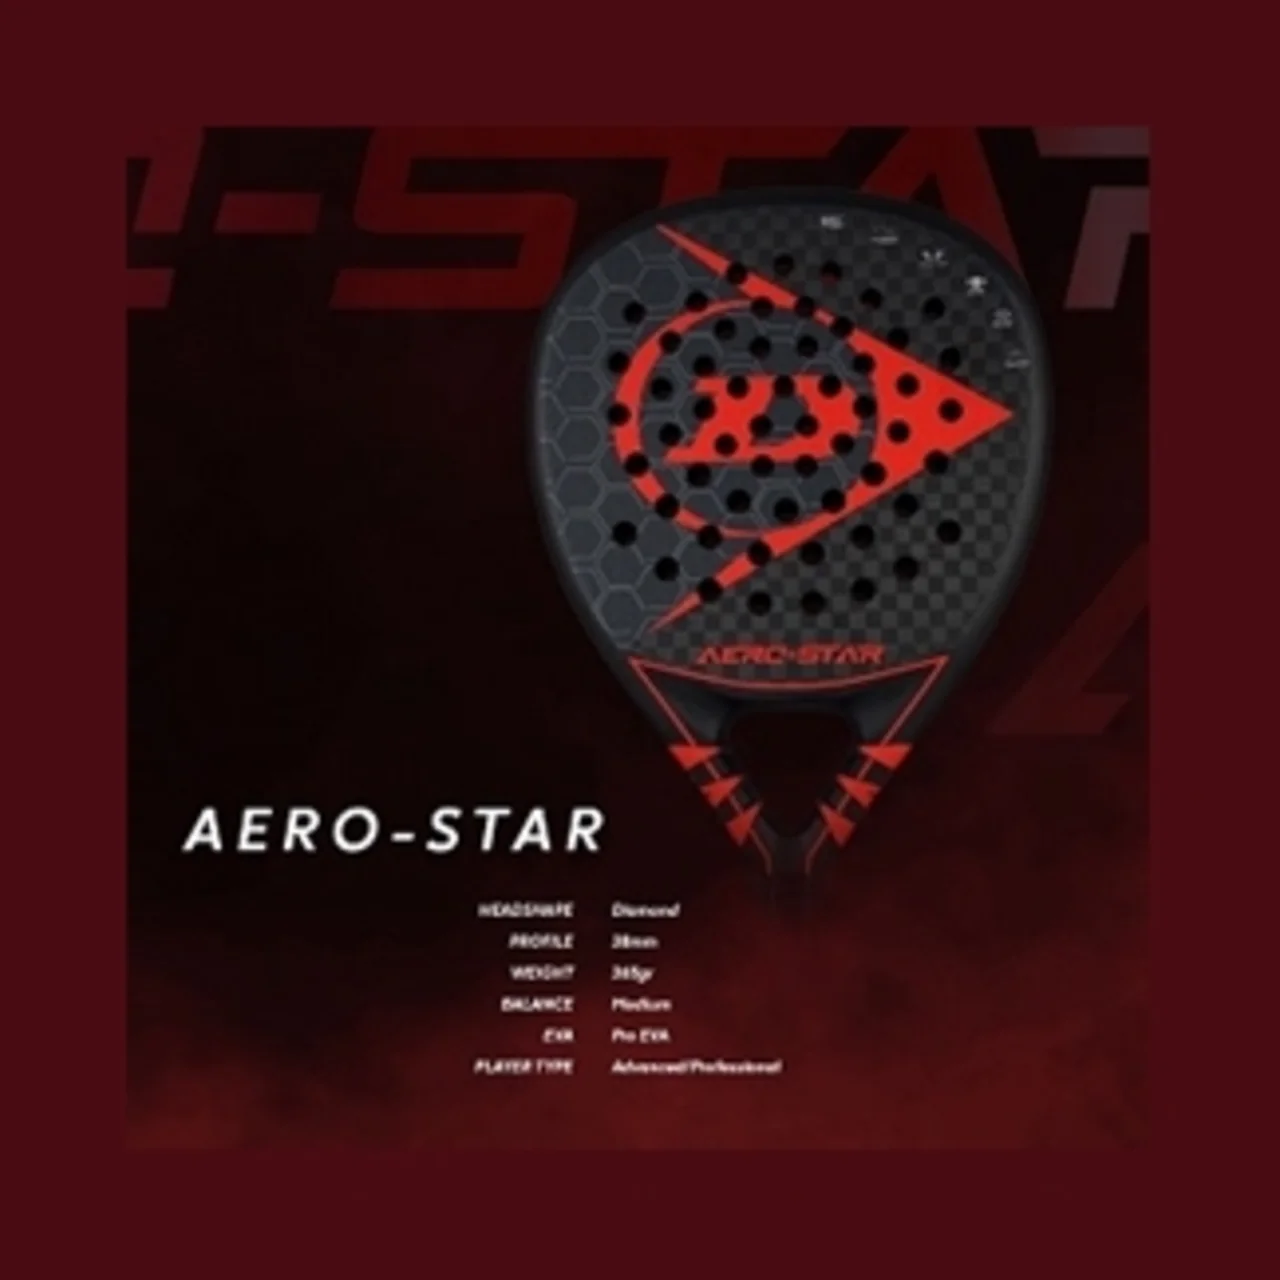 Dunlop Aero-Star